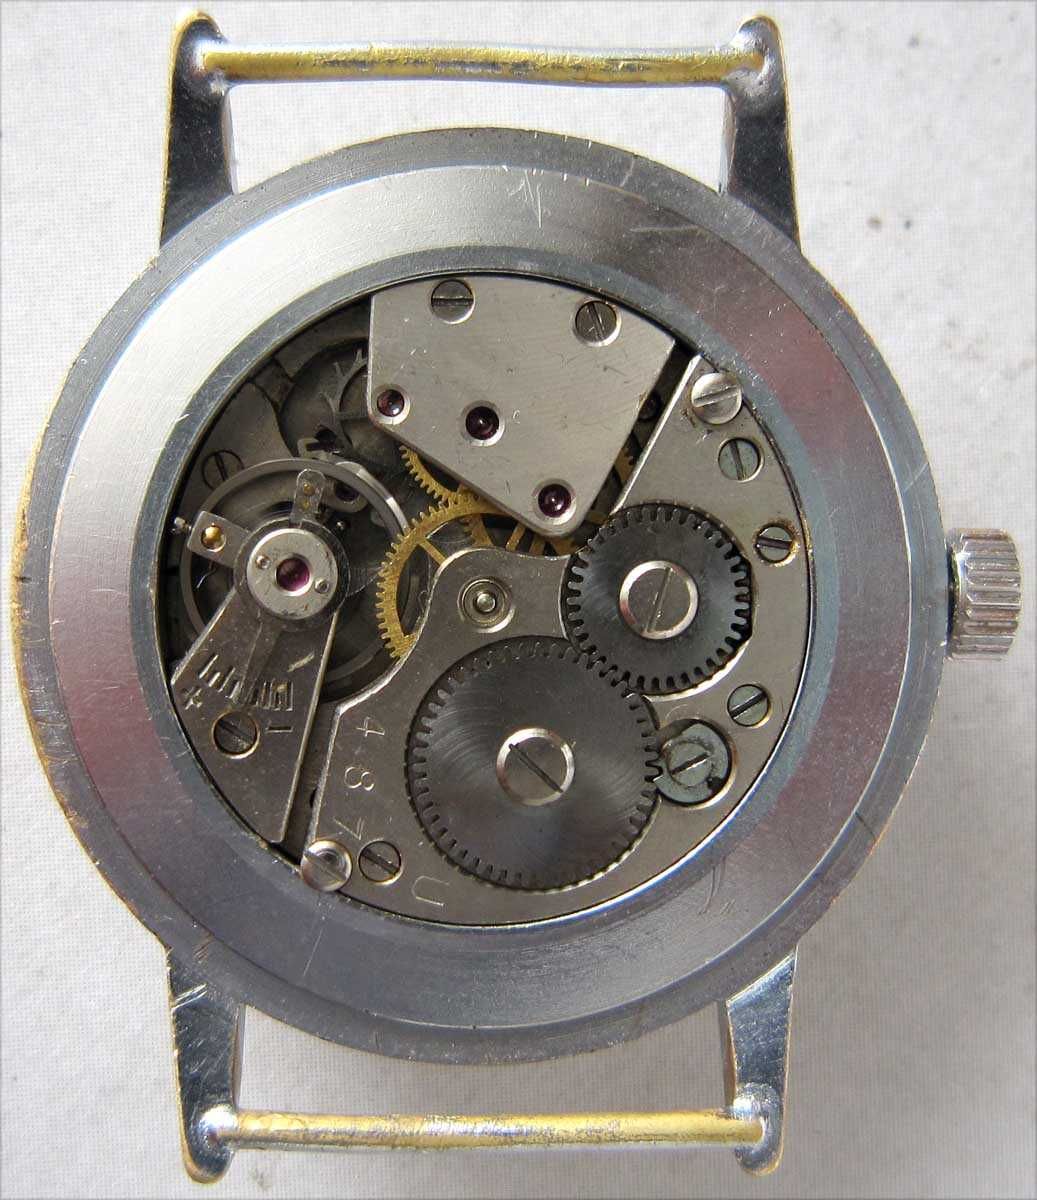 Thiel UMF (Ruhla) zegarek